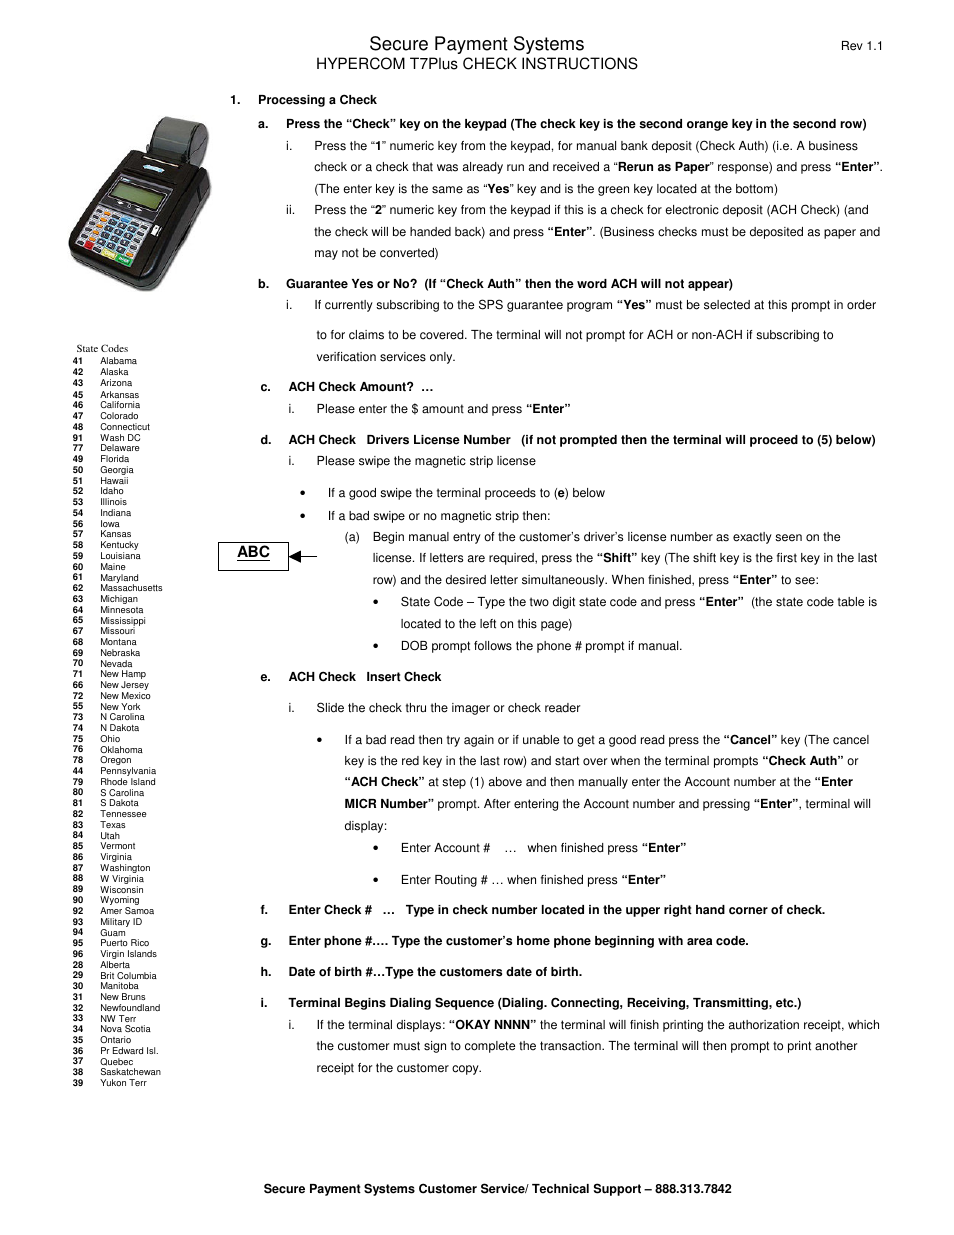 Hypercom T7Plus User Manual | 6 pages | Original mode